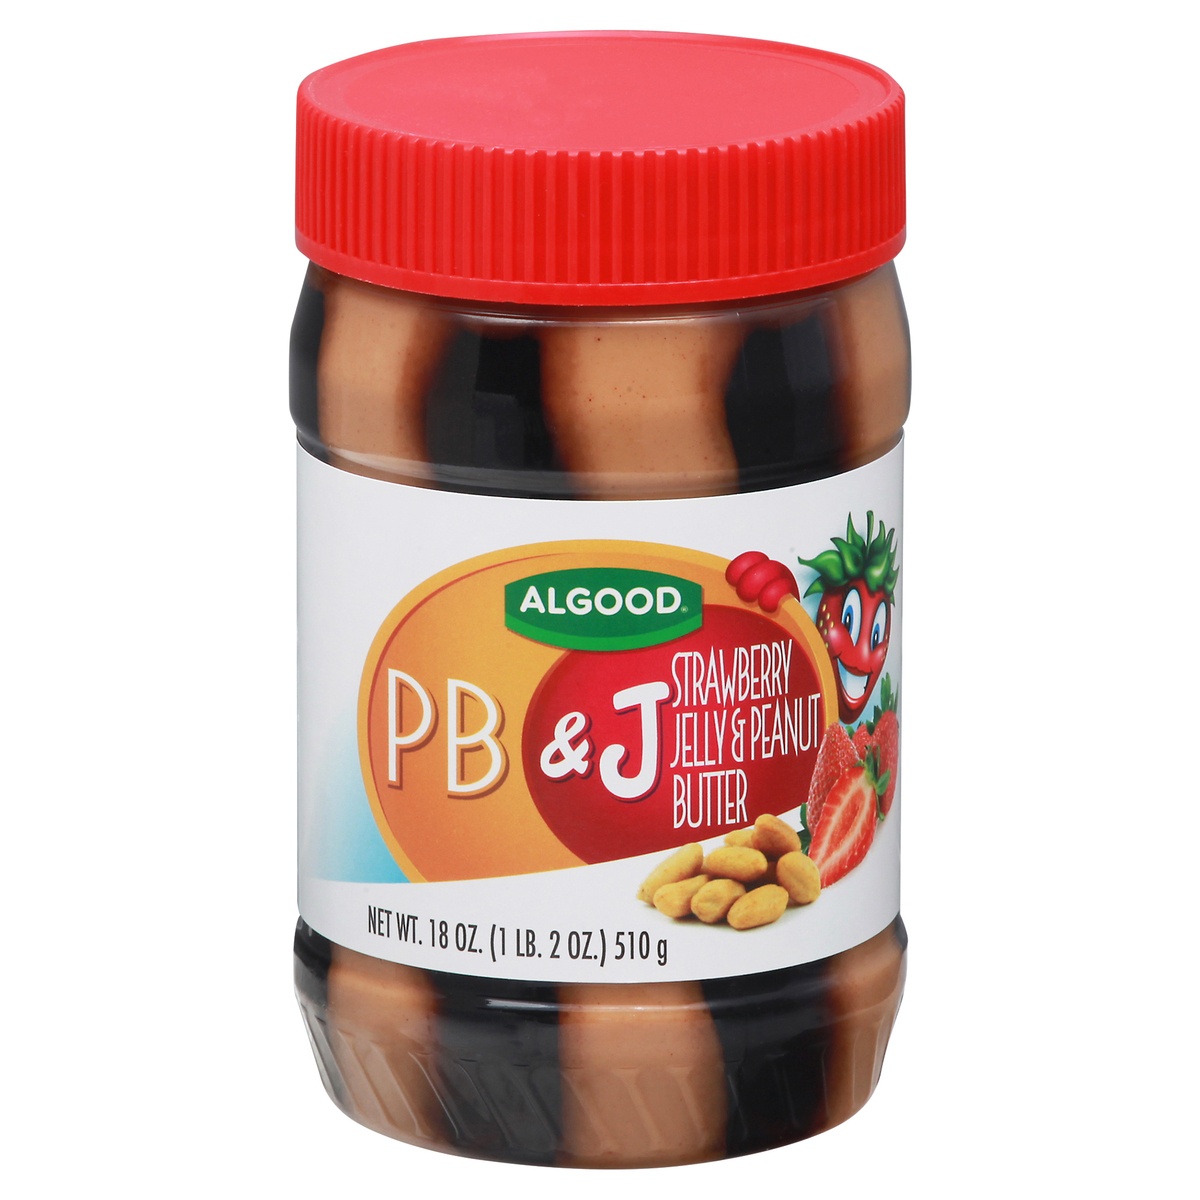 slide 1 of 1, Algood PB&J Strawberry Jelly & Peanut Butter, 18 oz